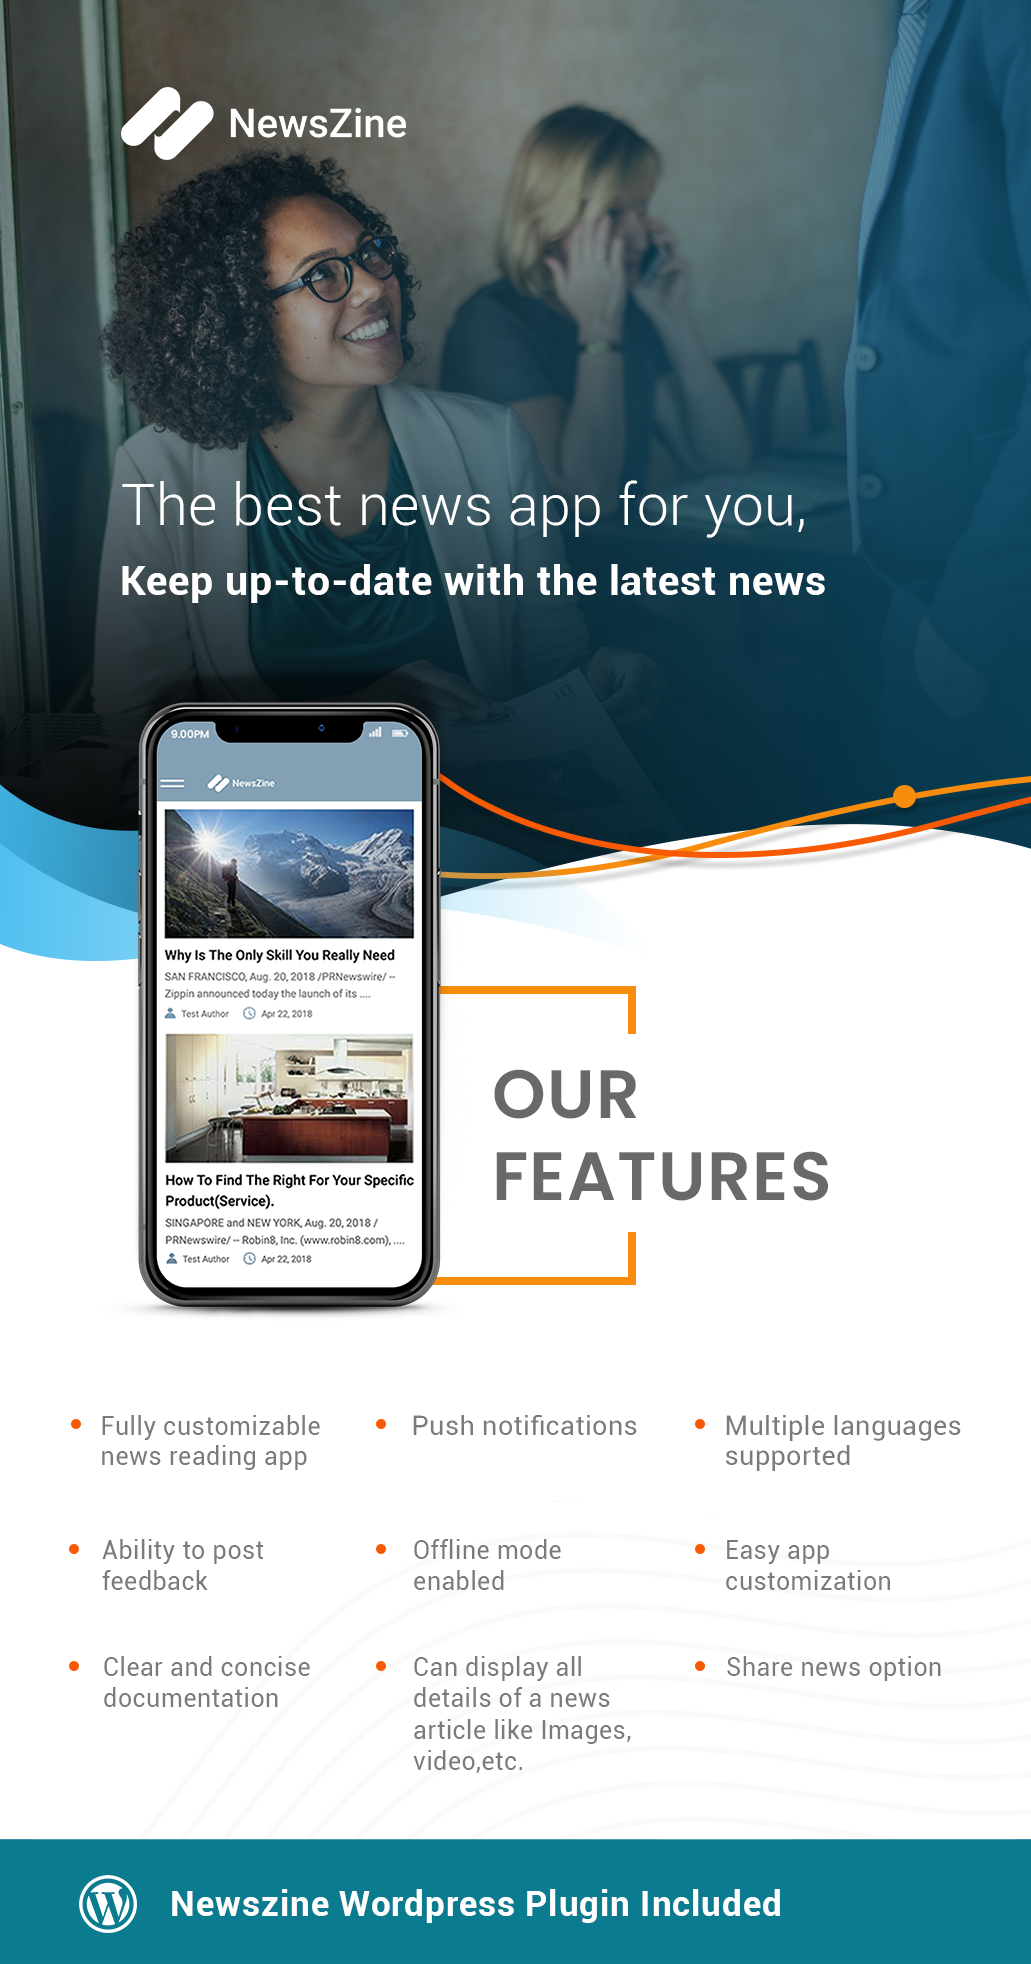 NewsZine - iOS | A complete News / Magazine App | WordPress Plugin Included - 1